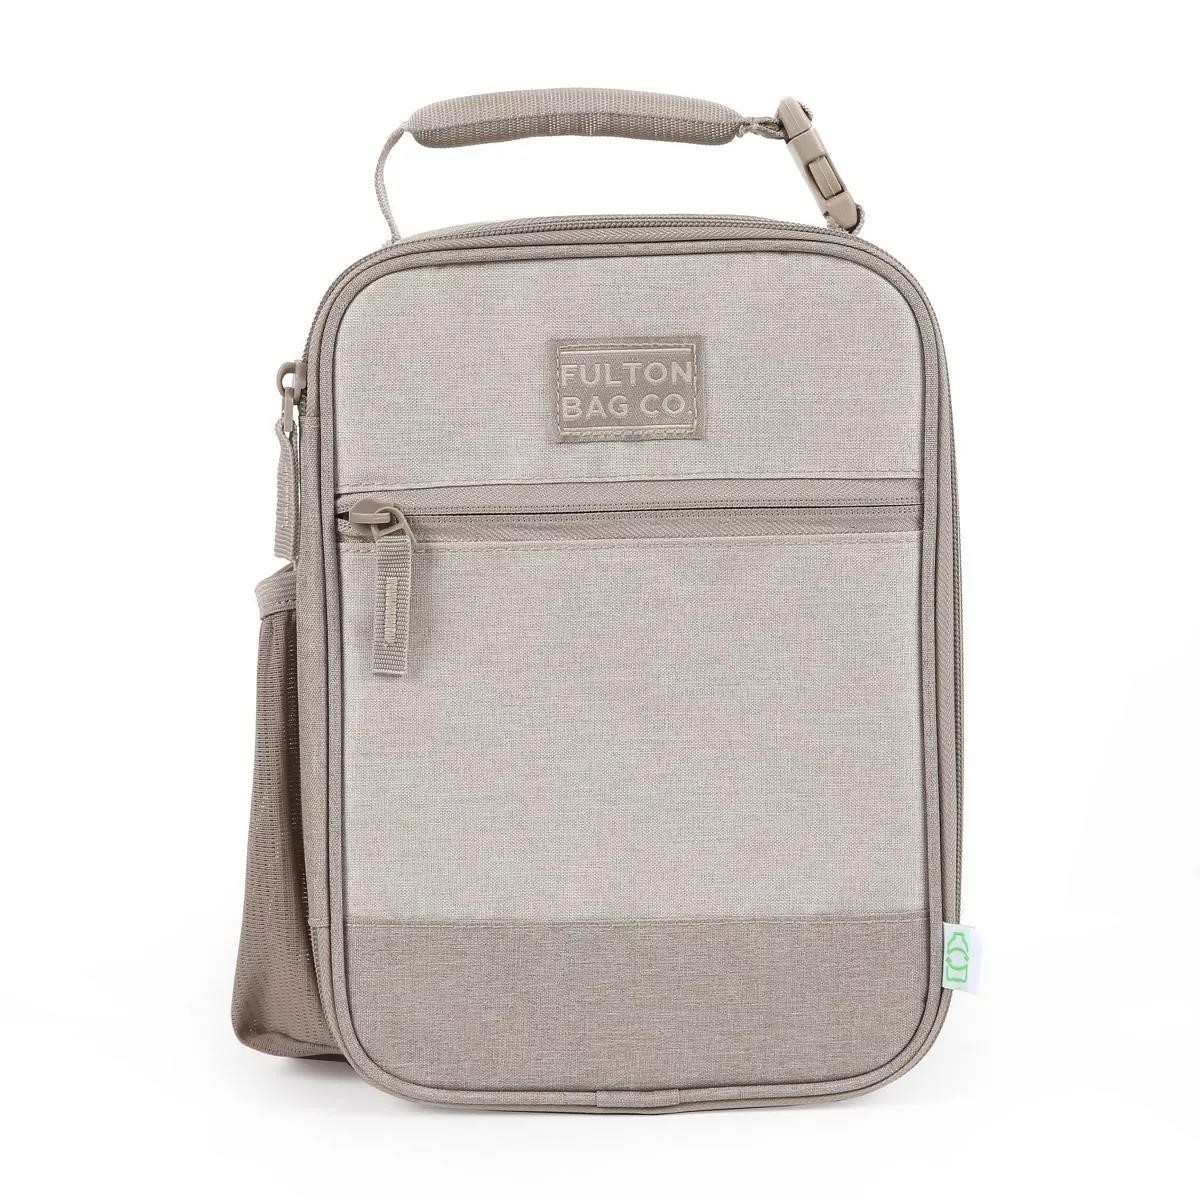 Fulton Bag Co. Upright Lunch Bag TAN